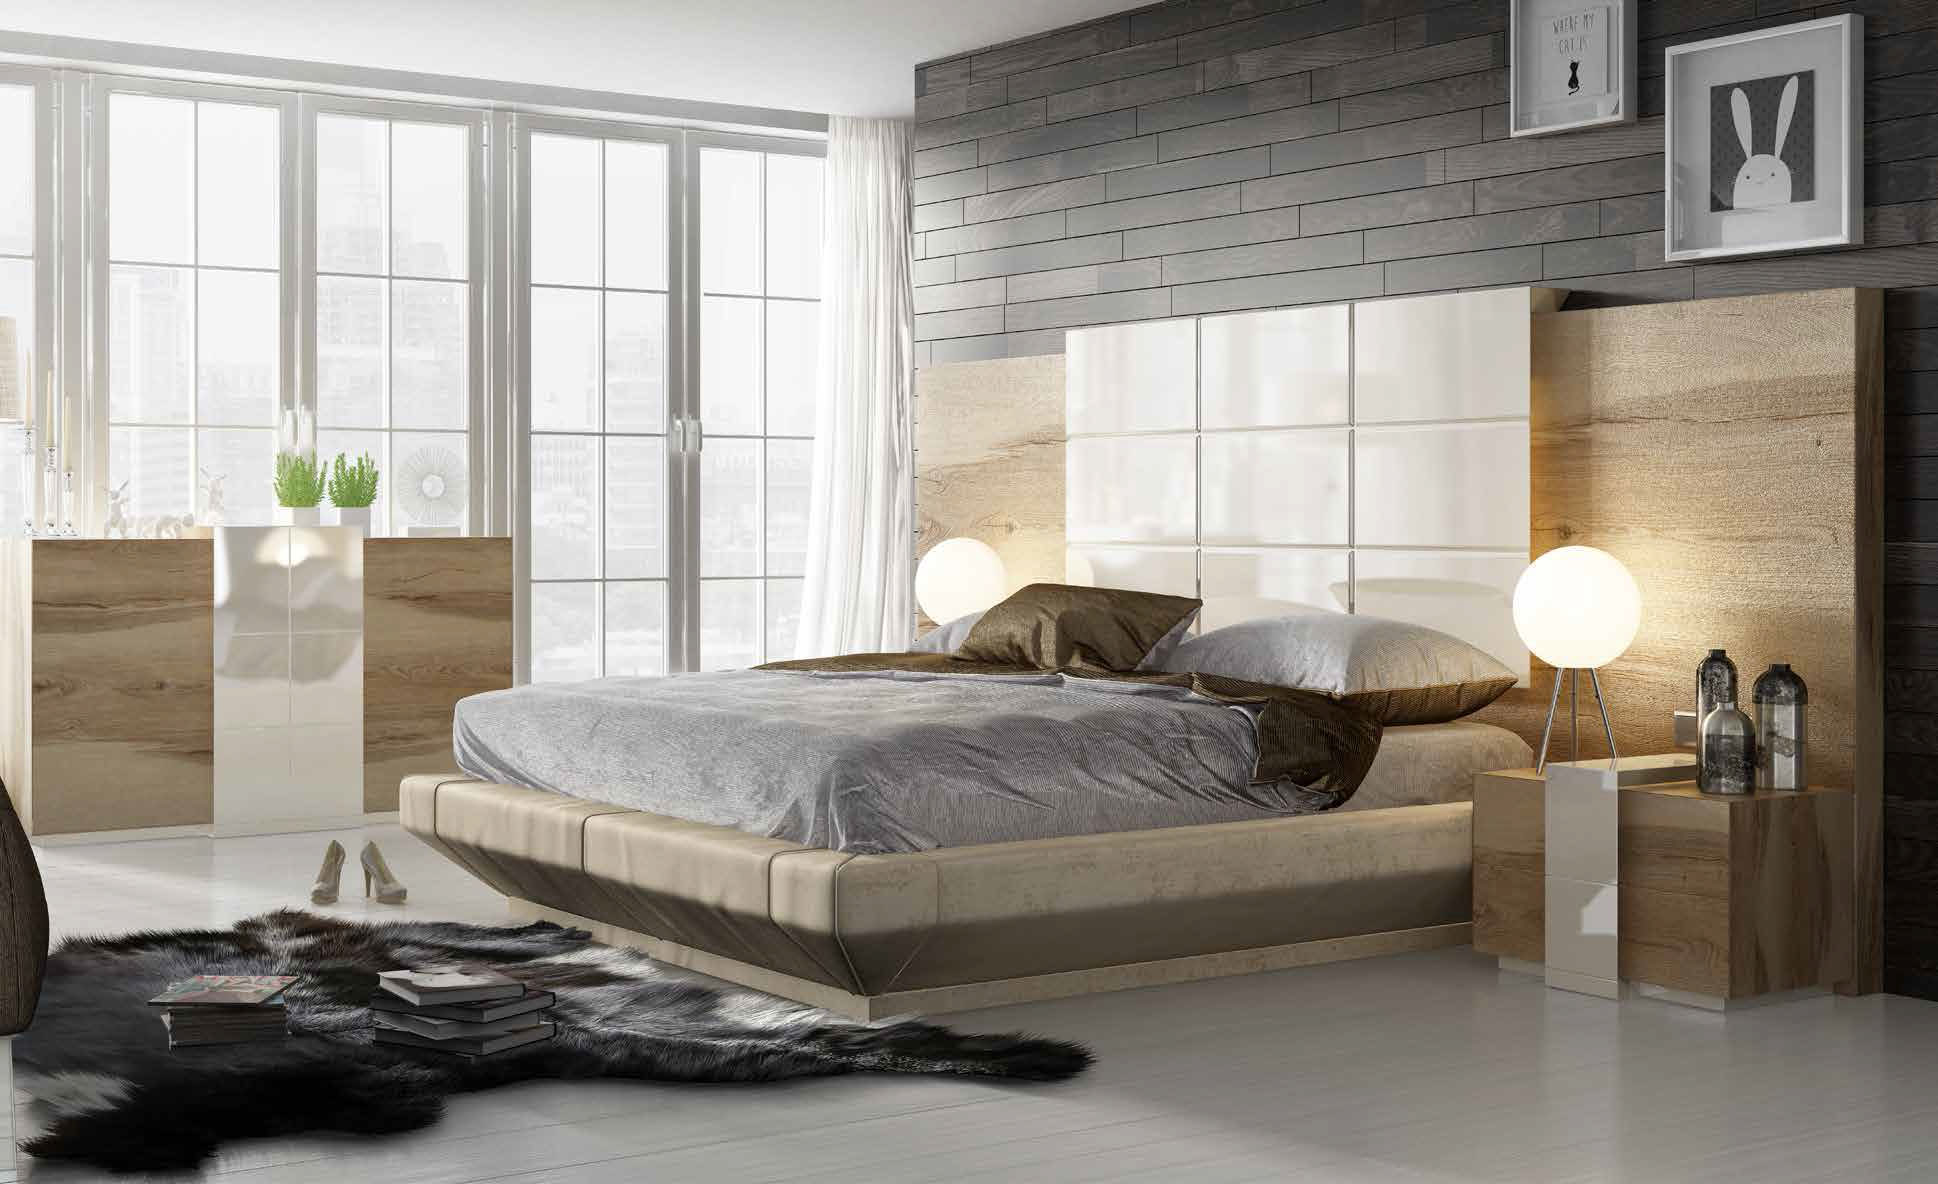 Brands Franco Furniture Bedrooms vol1, Spain DOR 04